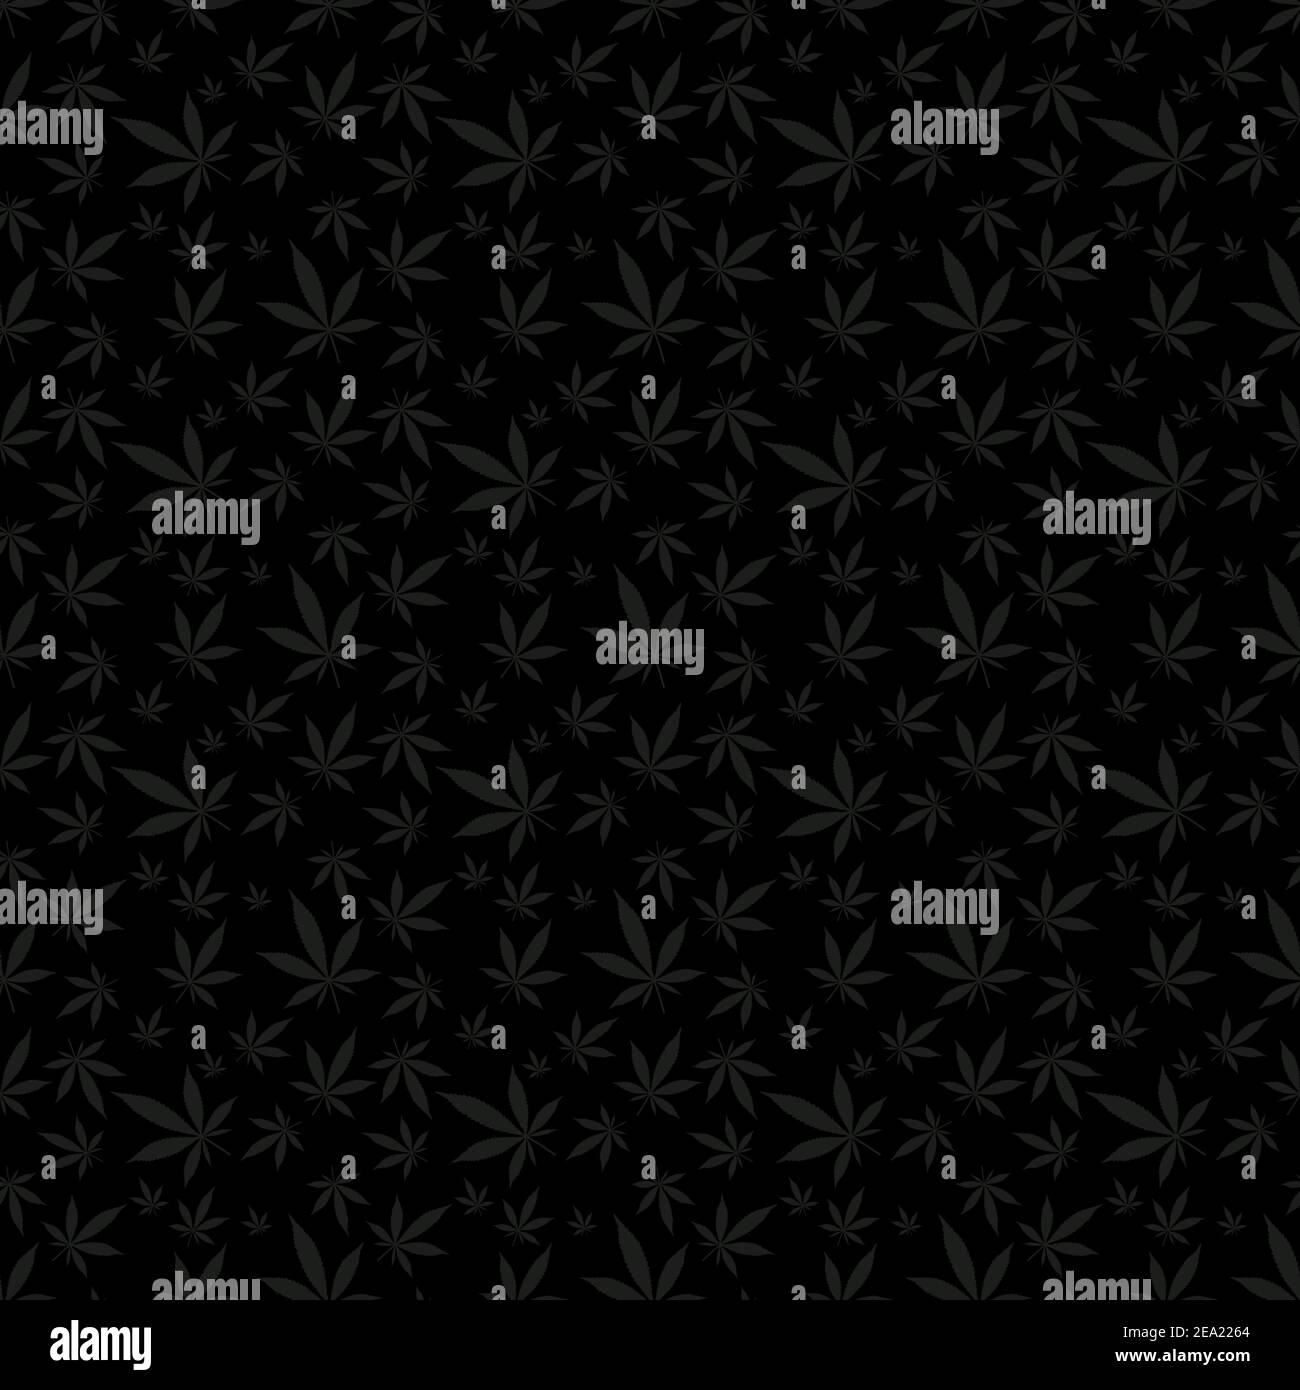 Marijuana wallpaper Black and White Stock Photos & Images - Alamy